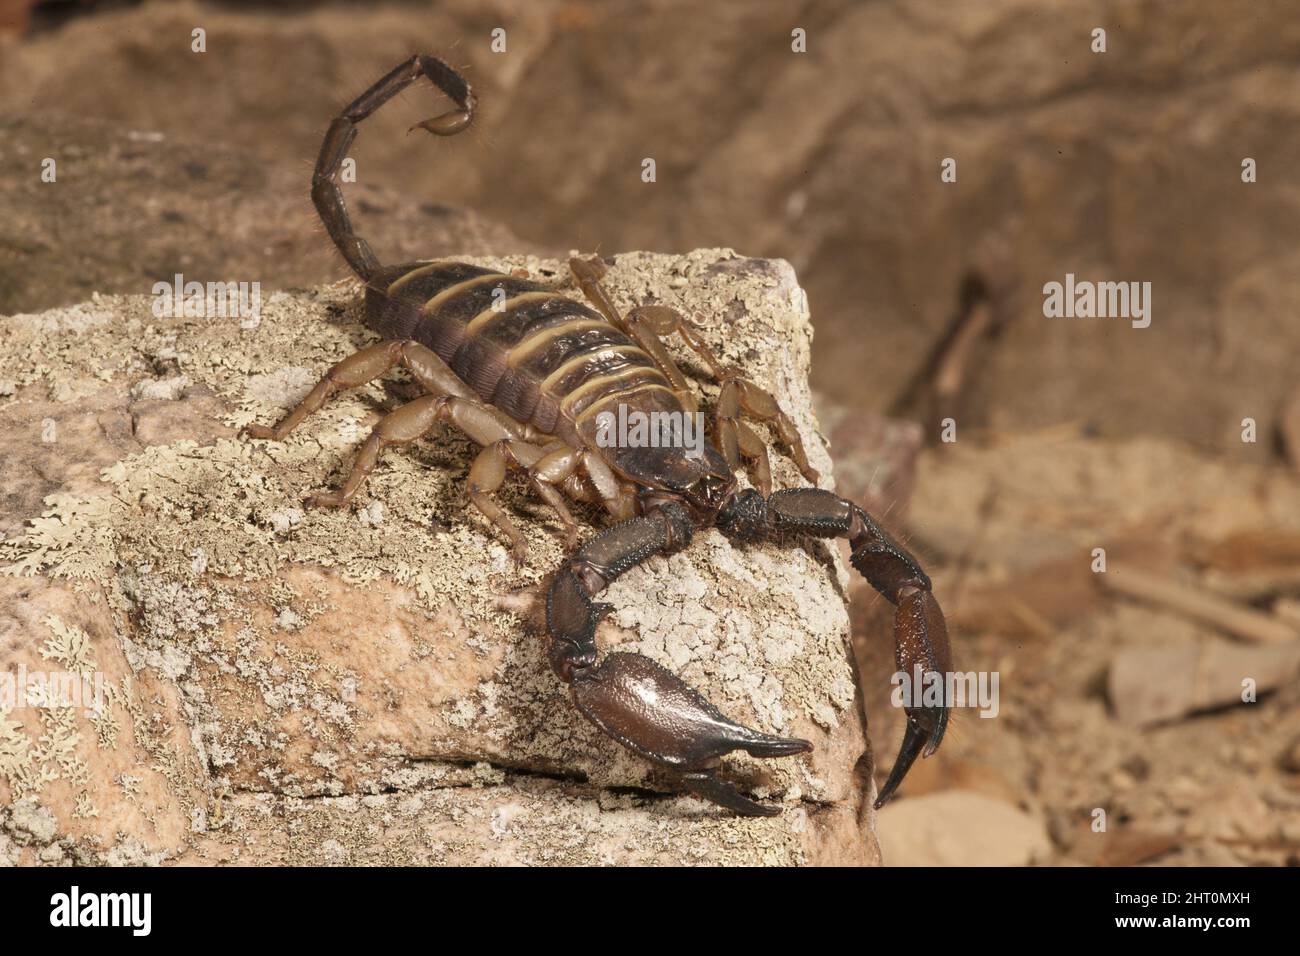 Flat rock scorpion (Hadogenes troglodytes), the longest scorpion, reaching 20 cm. Its flattened body is an adaptation to life in rock crevices. Origin Stock Photo